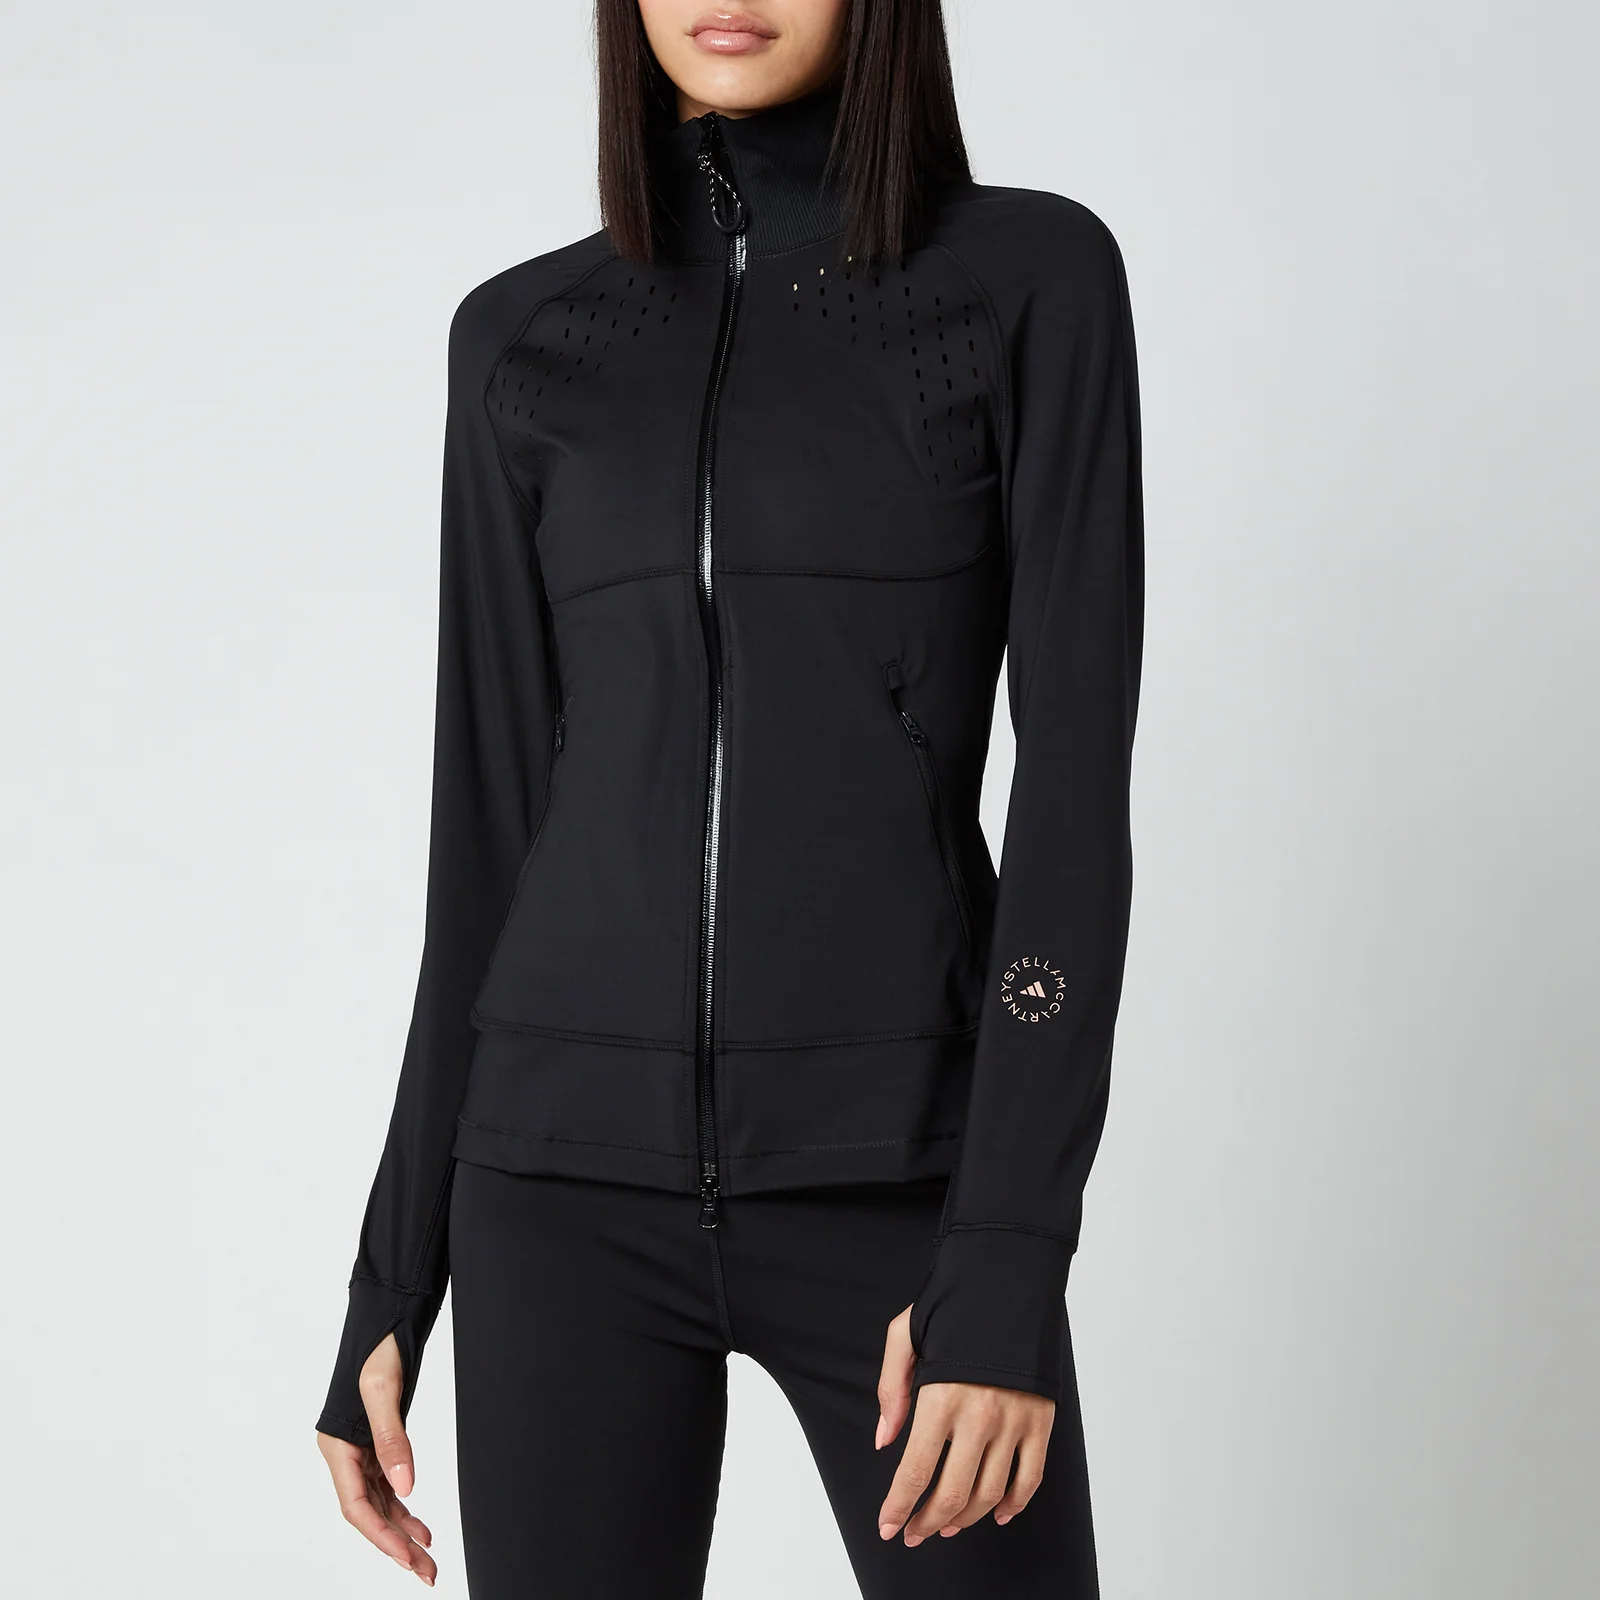 adidas by Stella McCartney Women's Truepurpose Midlayer Jacket - Black Image 1